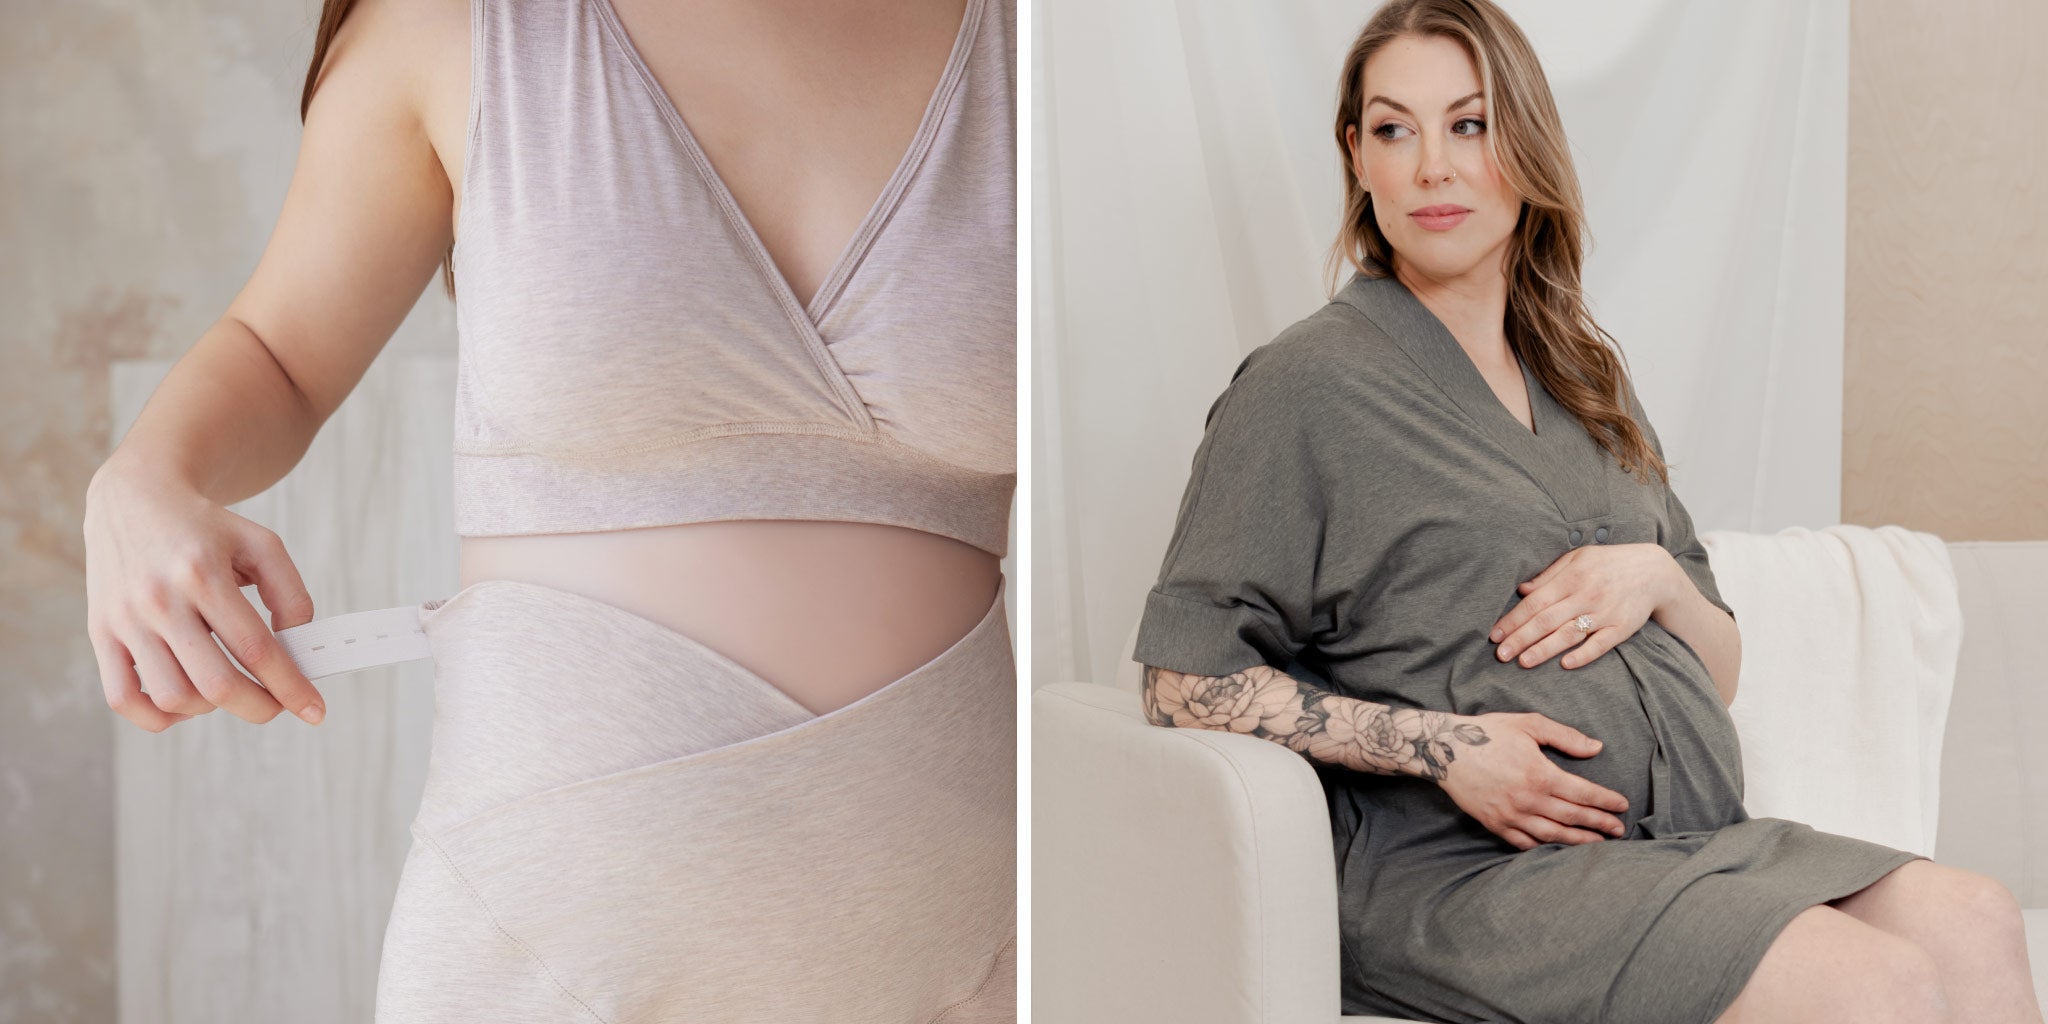 Nest Bump maternity clothes